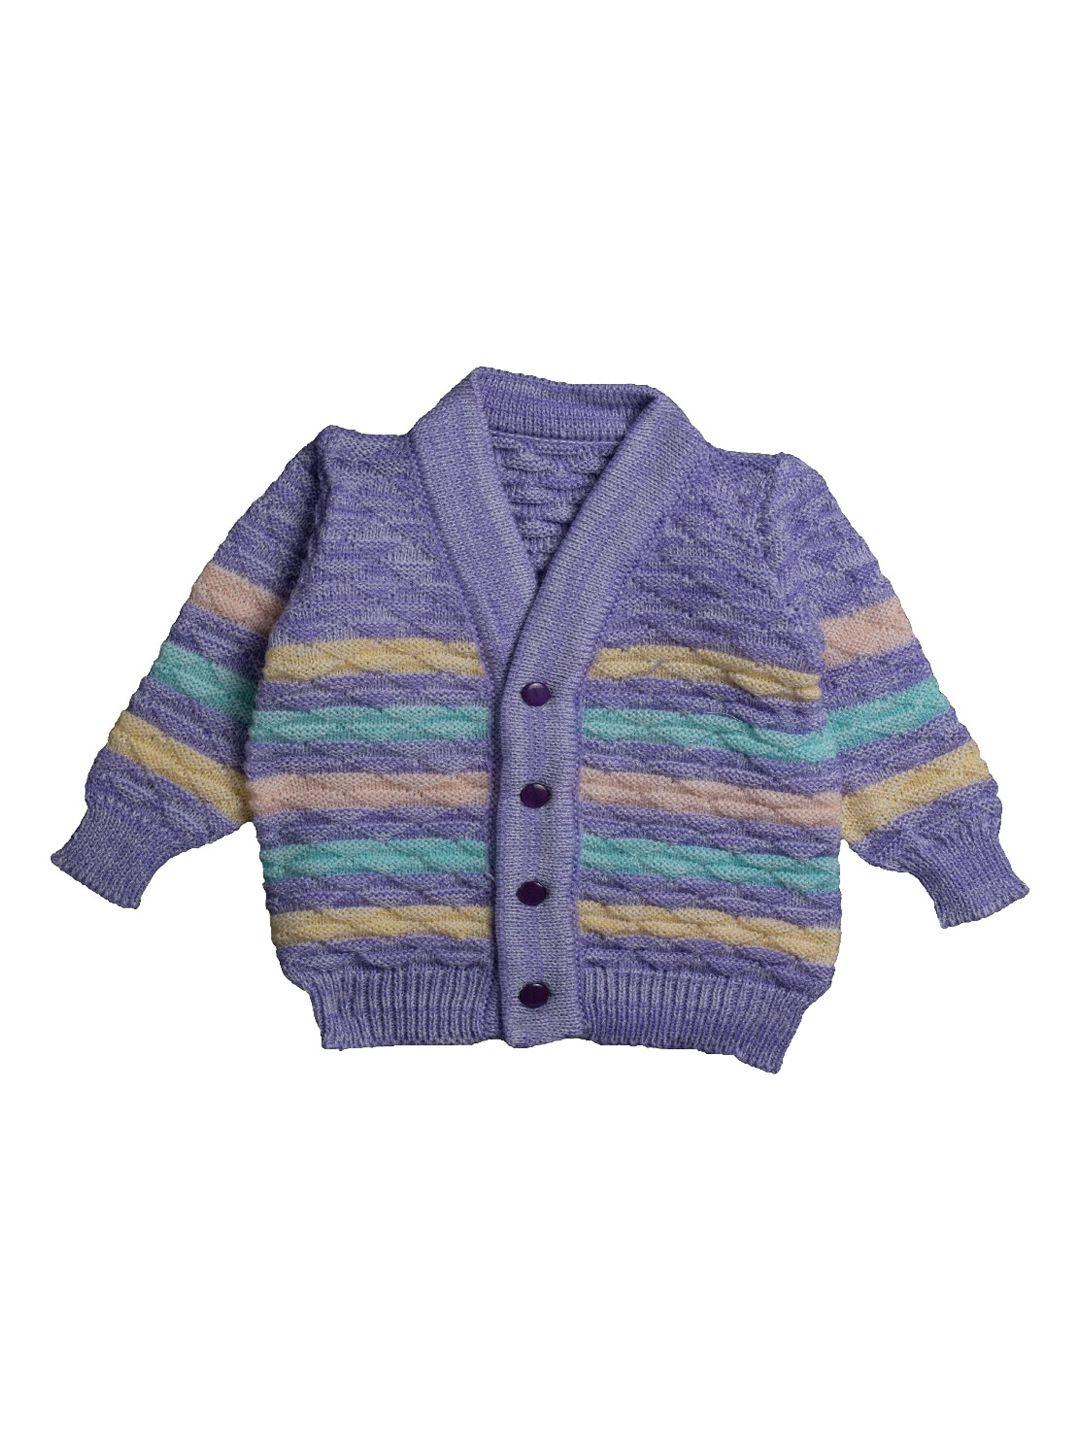 little-angels-unisex-kids-violet-striped-cardigan-sweater